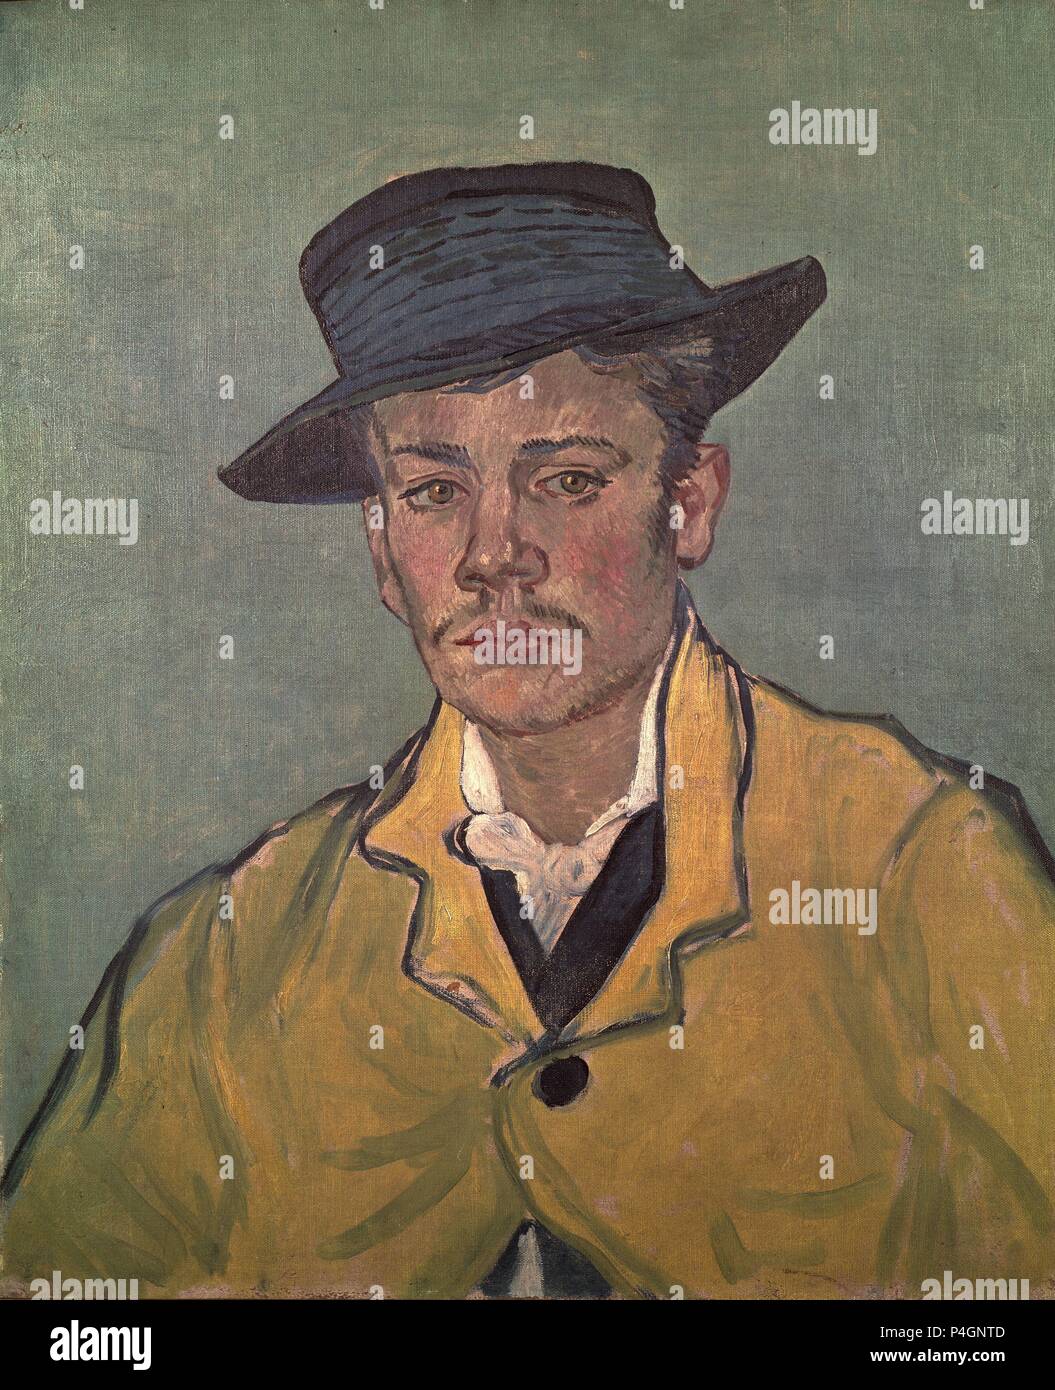 Portrait von Armand Roulin - 1888 - 65 x 54,1 cm, Öl auf Leinwand. Autor: Vincent van Gogh (1853-1890). Ort: Museum Folkwang, Essen, Deutschland. Auch als: RETRATO DE ARMAND ROULIN A LA EDAD DE 17 años" bekannt ist. Stockfoto